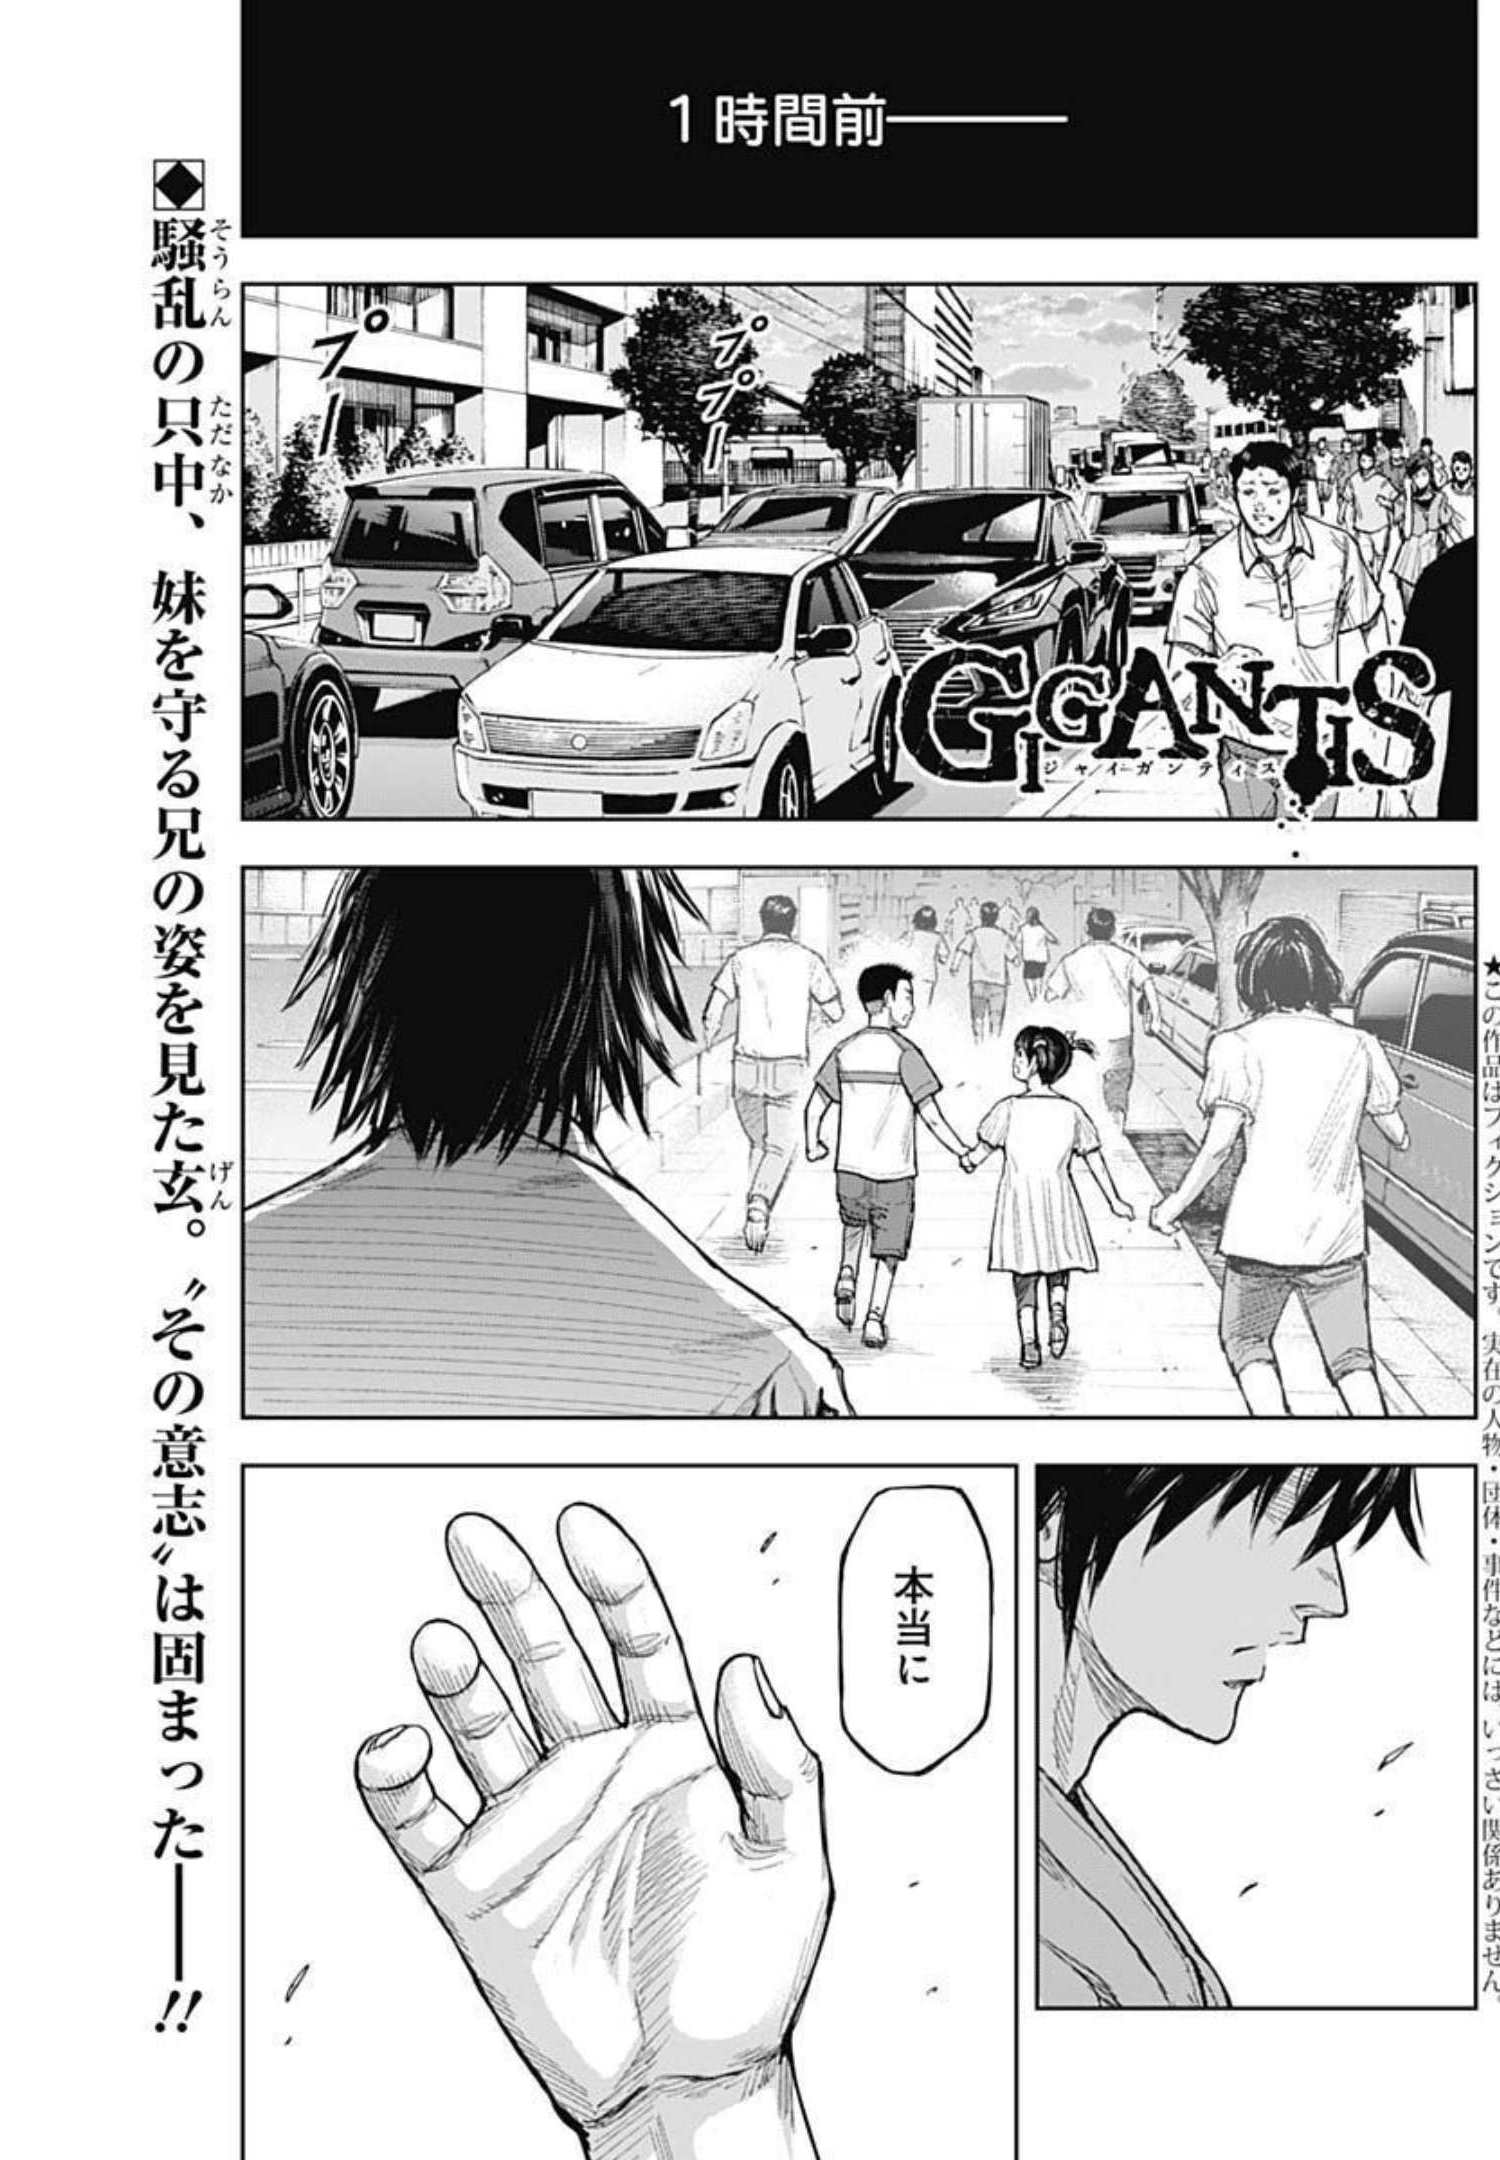 GIGANTISージャイガンティスー 第13話 - Page 1